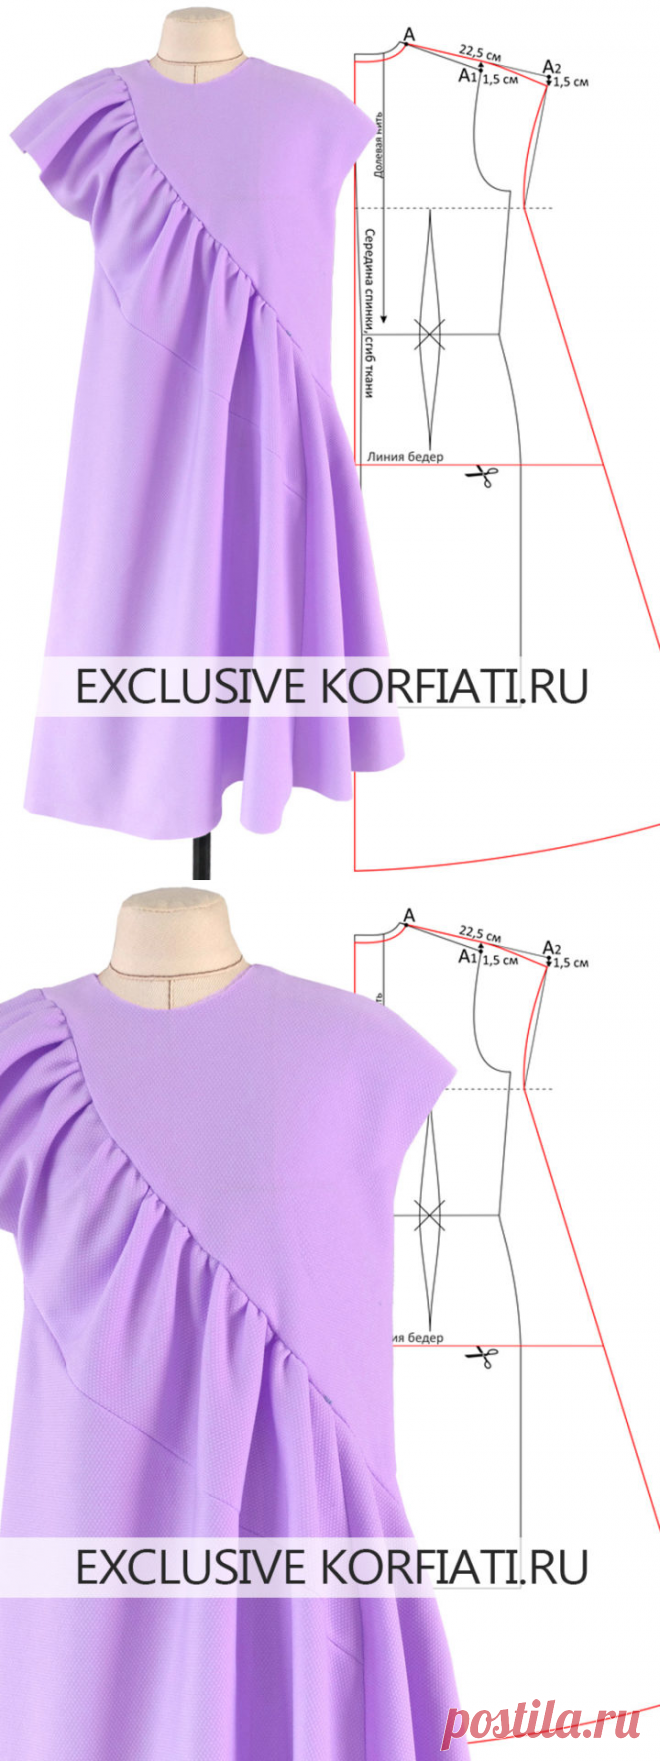 Выкройка платья-балахон от Анастасии Корфиати